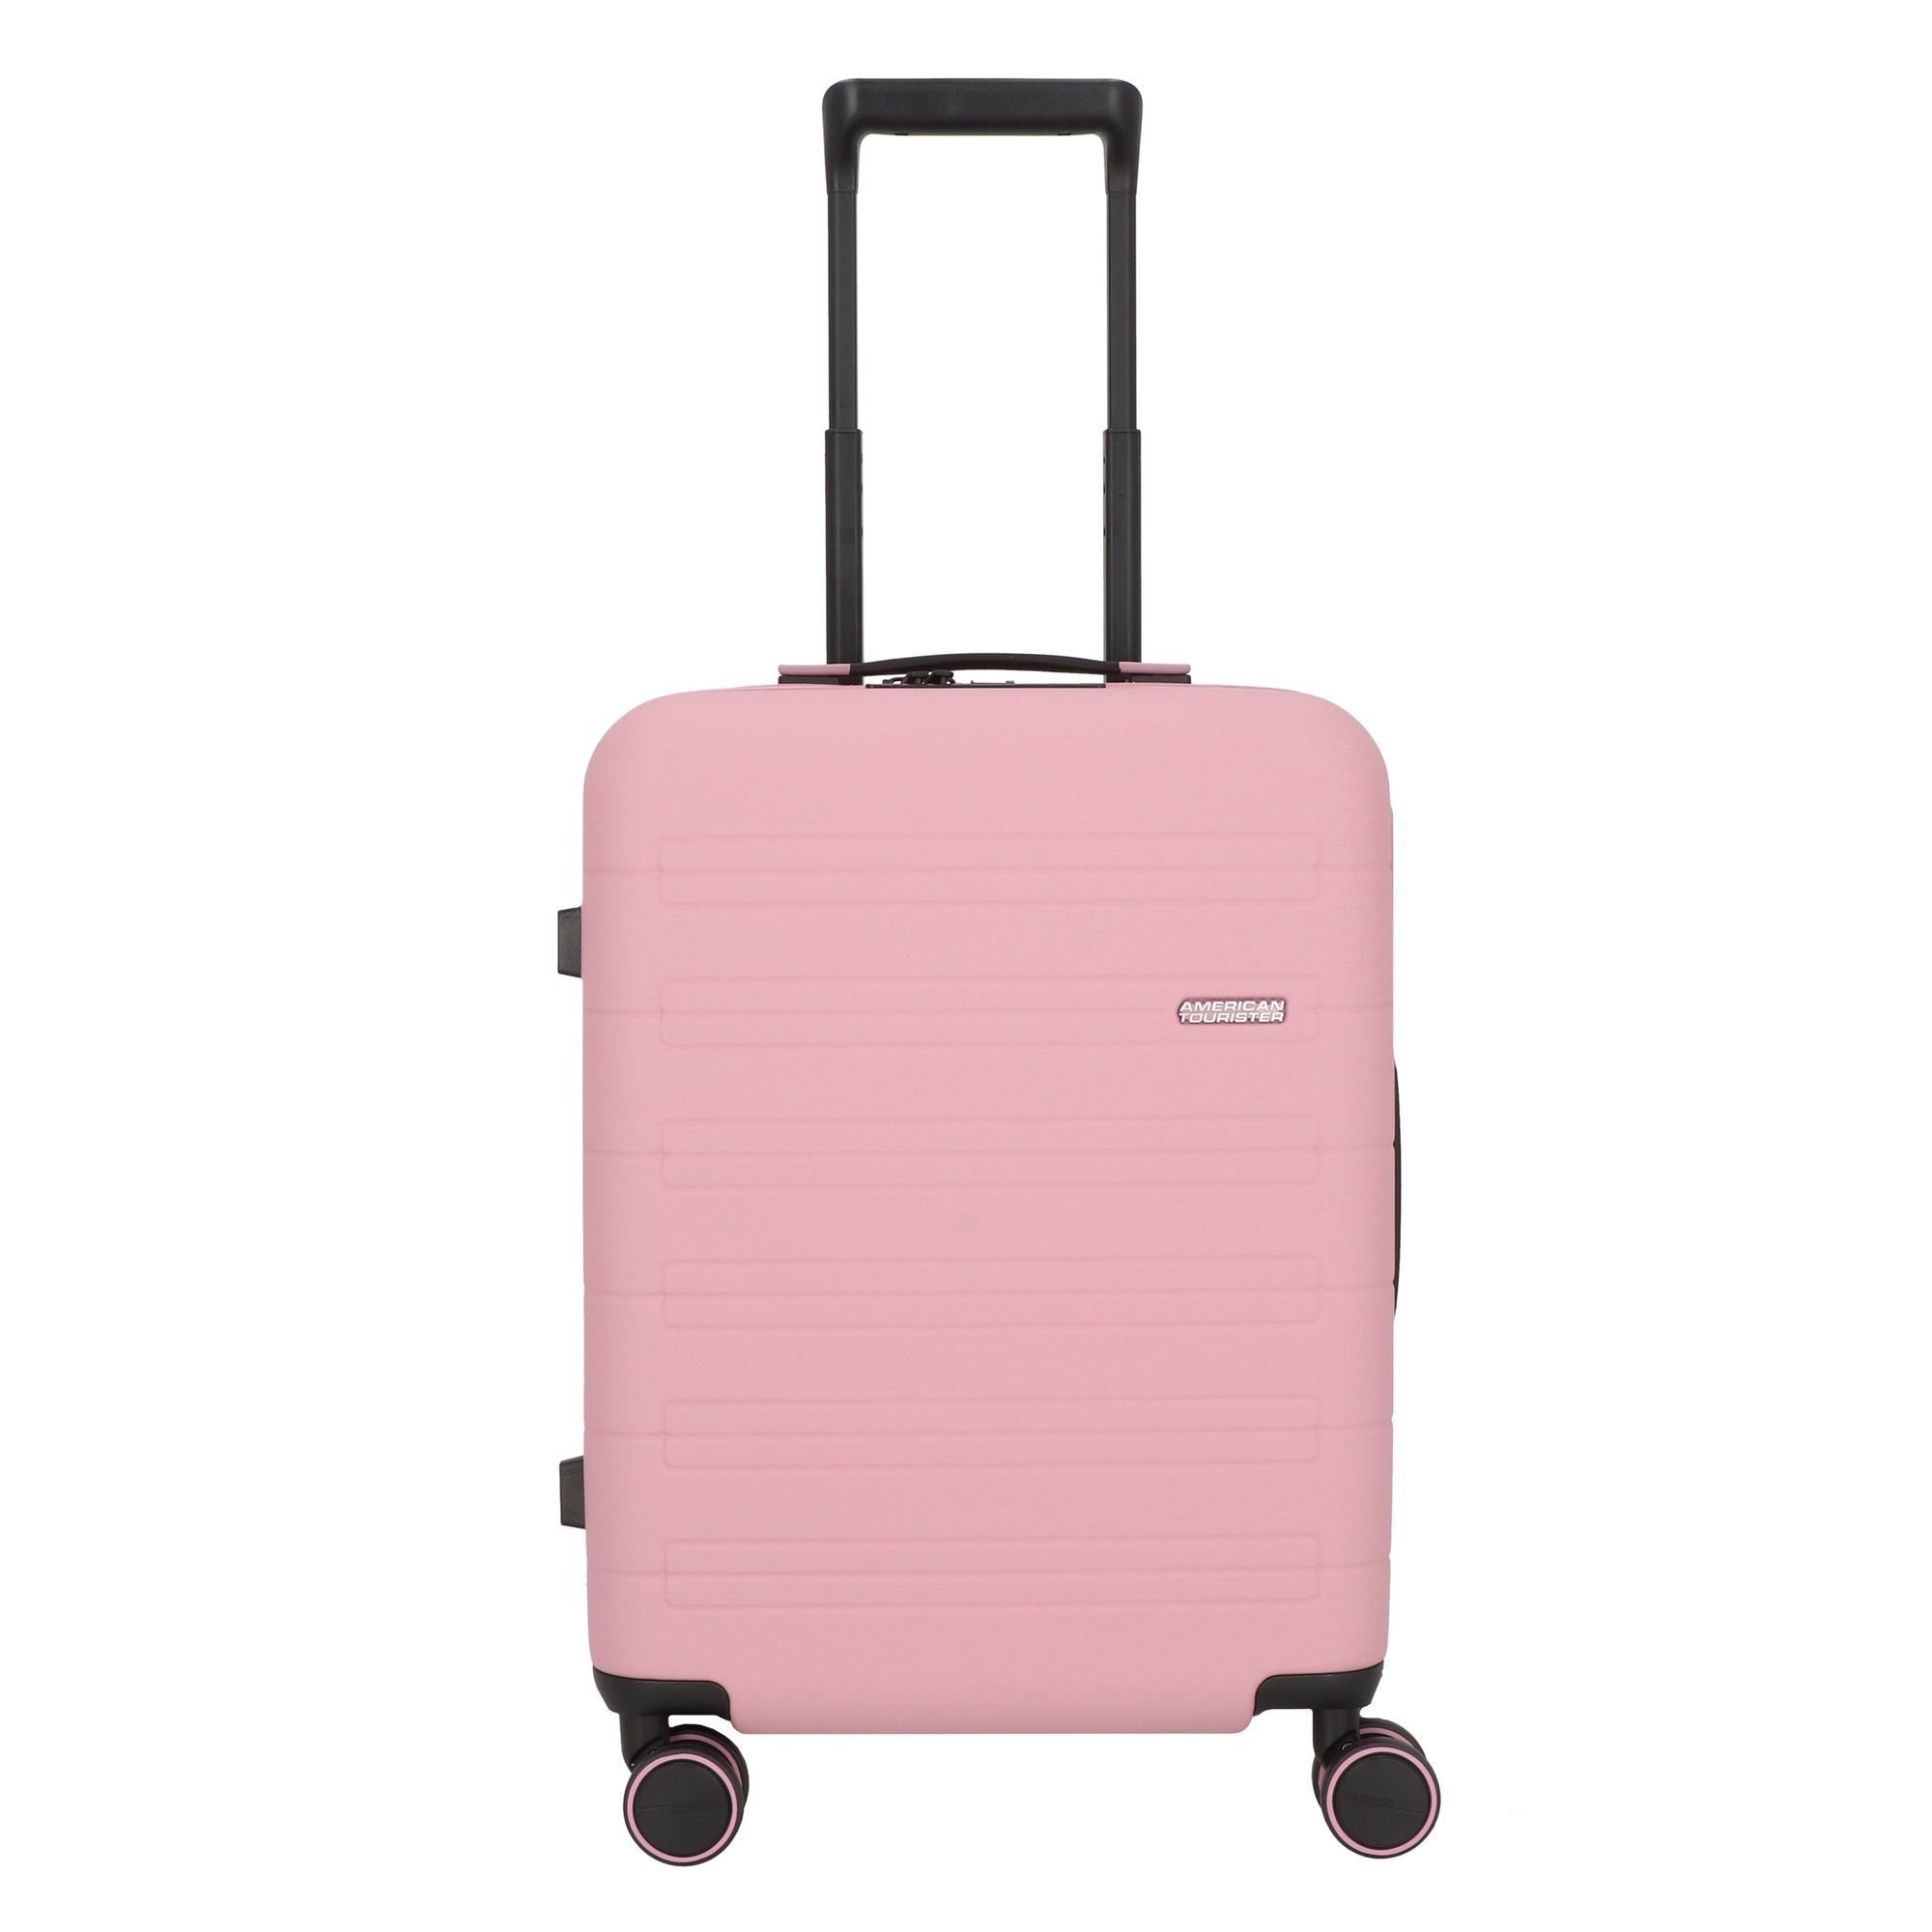 American Tourister® Handgepäck-Trolley Novastream, 4 Rollen, Polycarbonat vintage pink | Handgepäck-Koffer